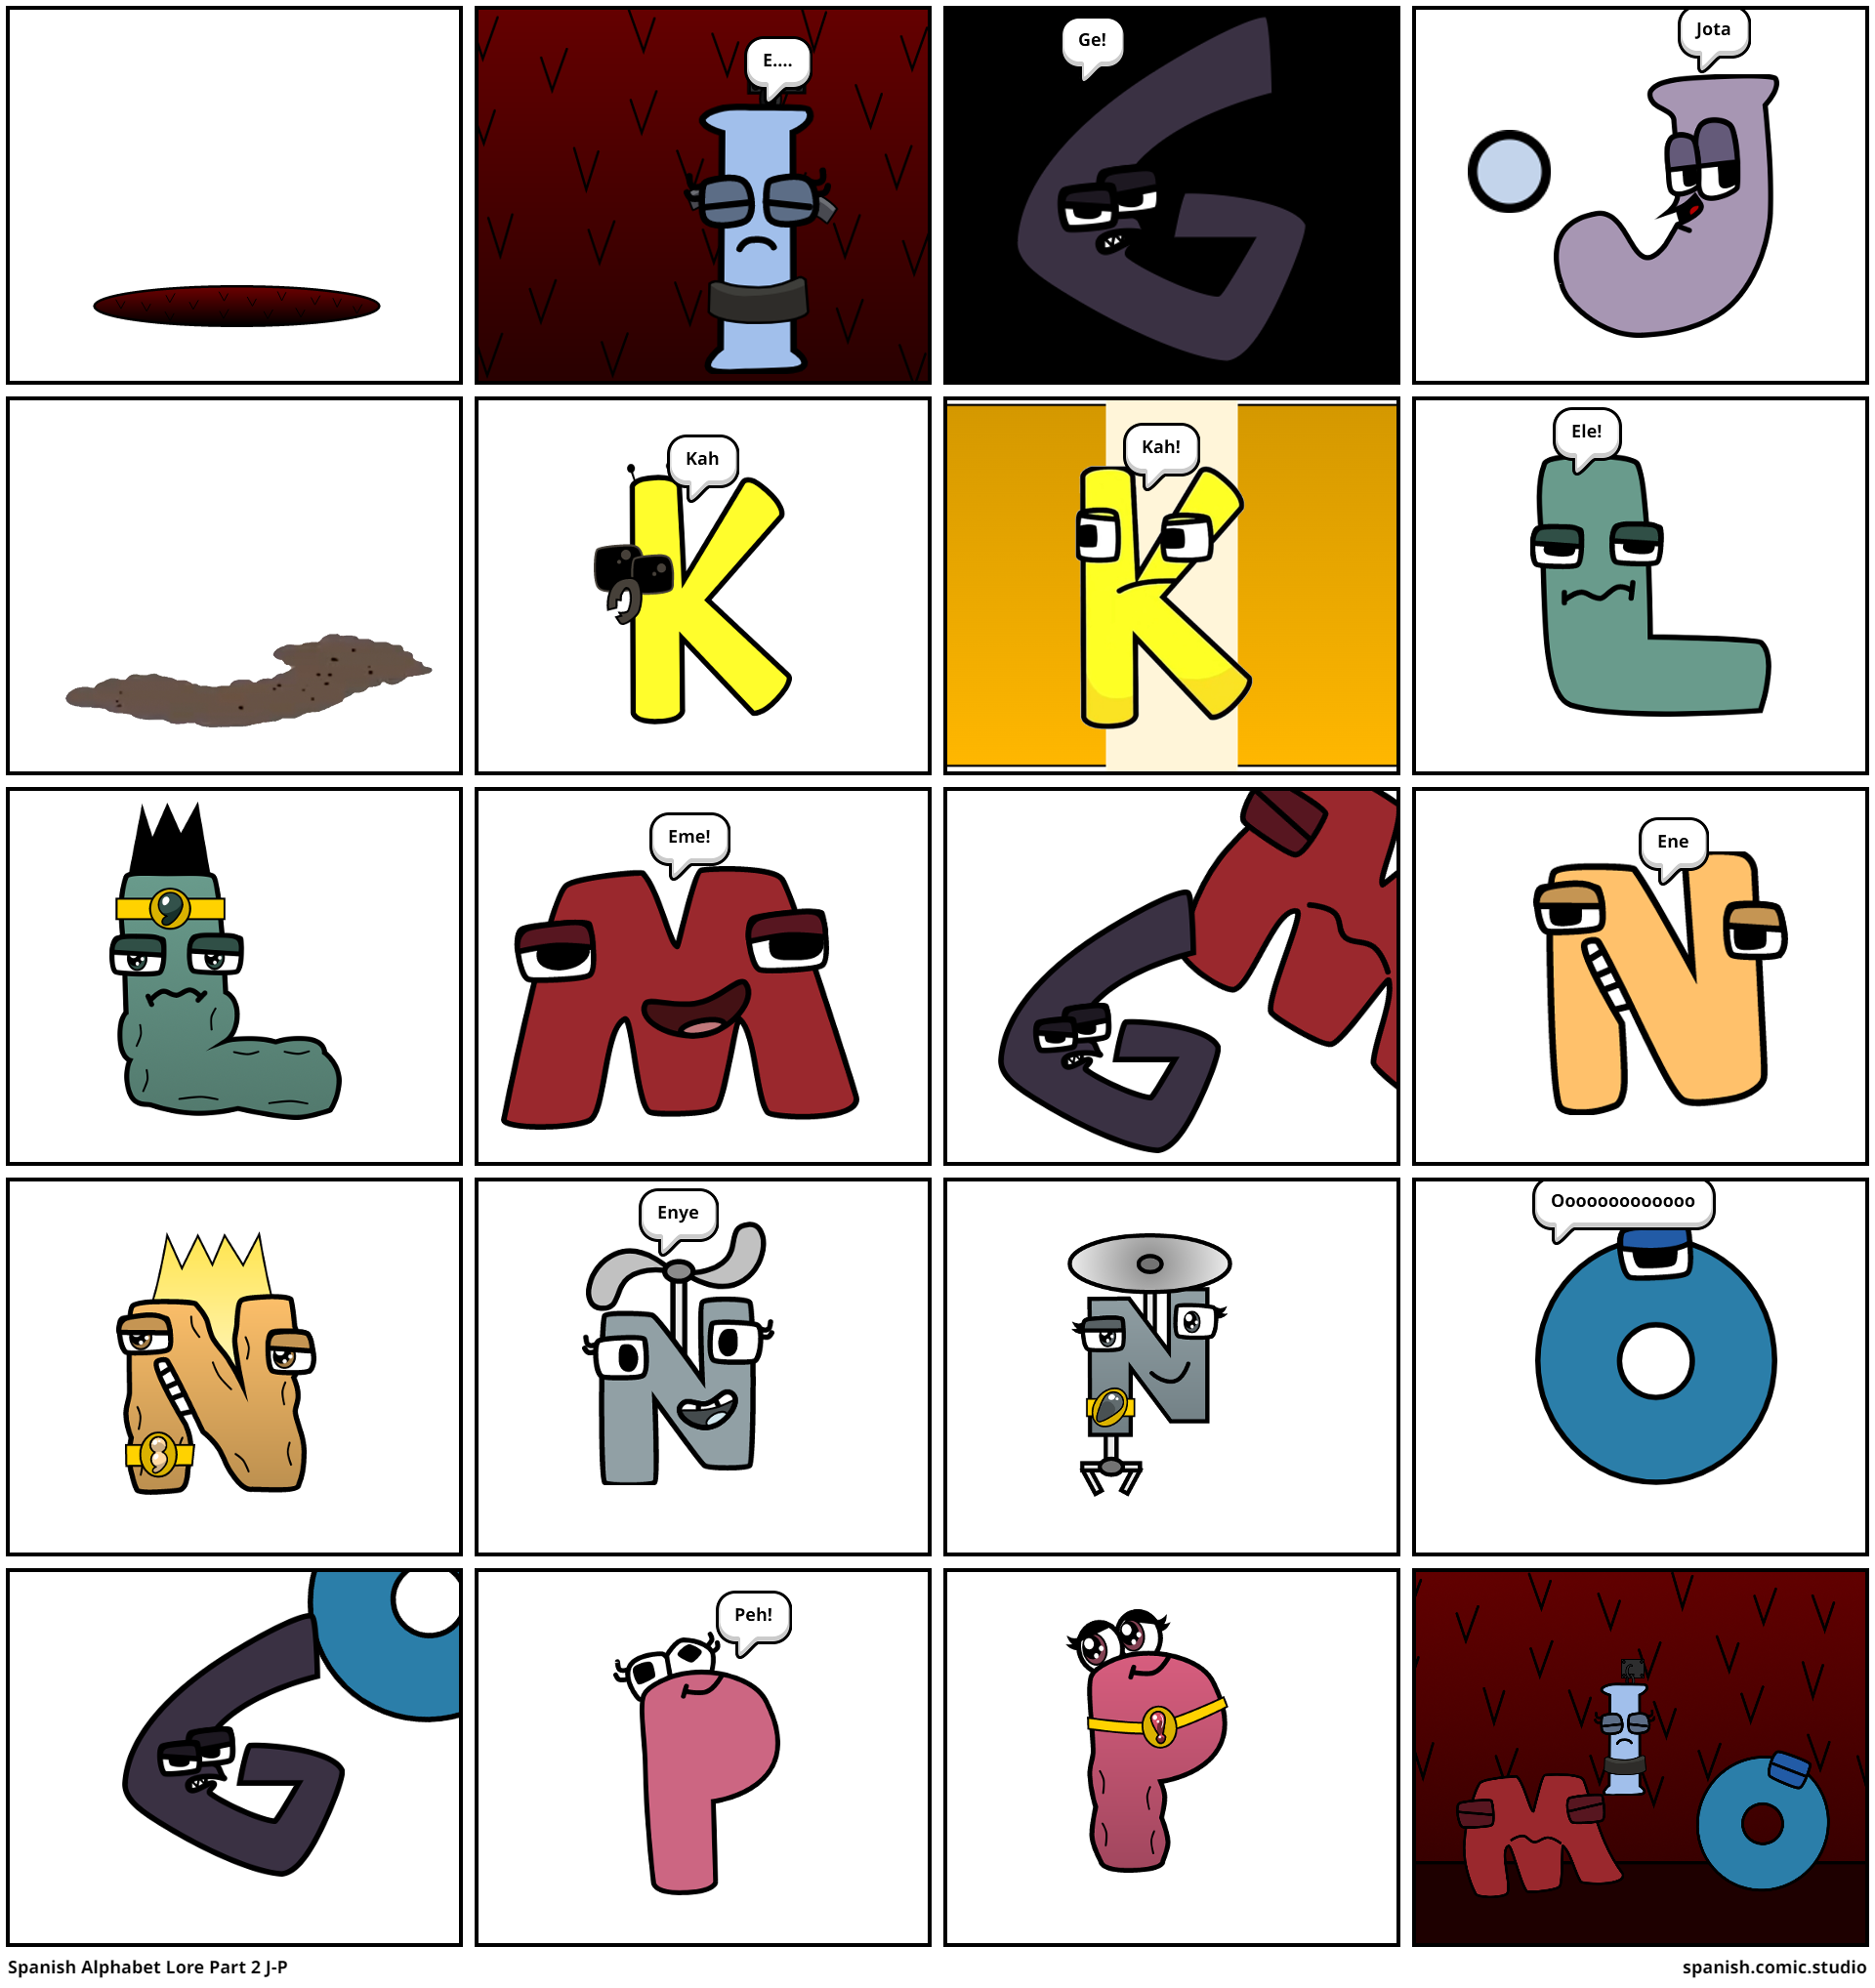 My Spanish Alphabet Lore Part 1 - Comic Studio